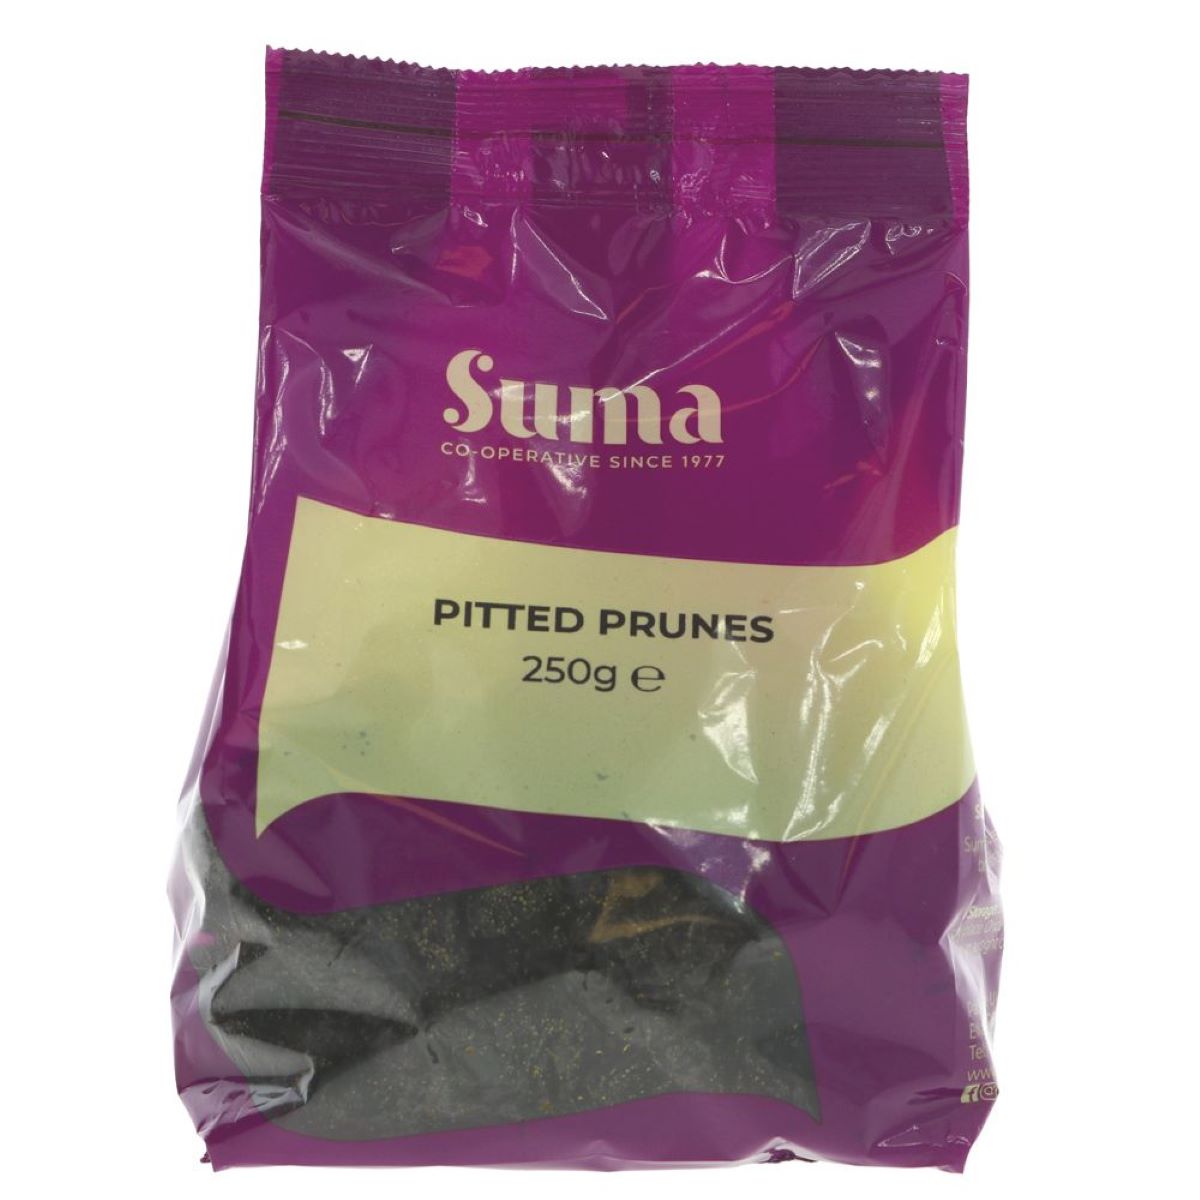 Suma Pitted Prunes 250g